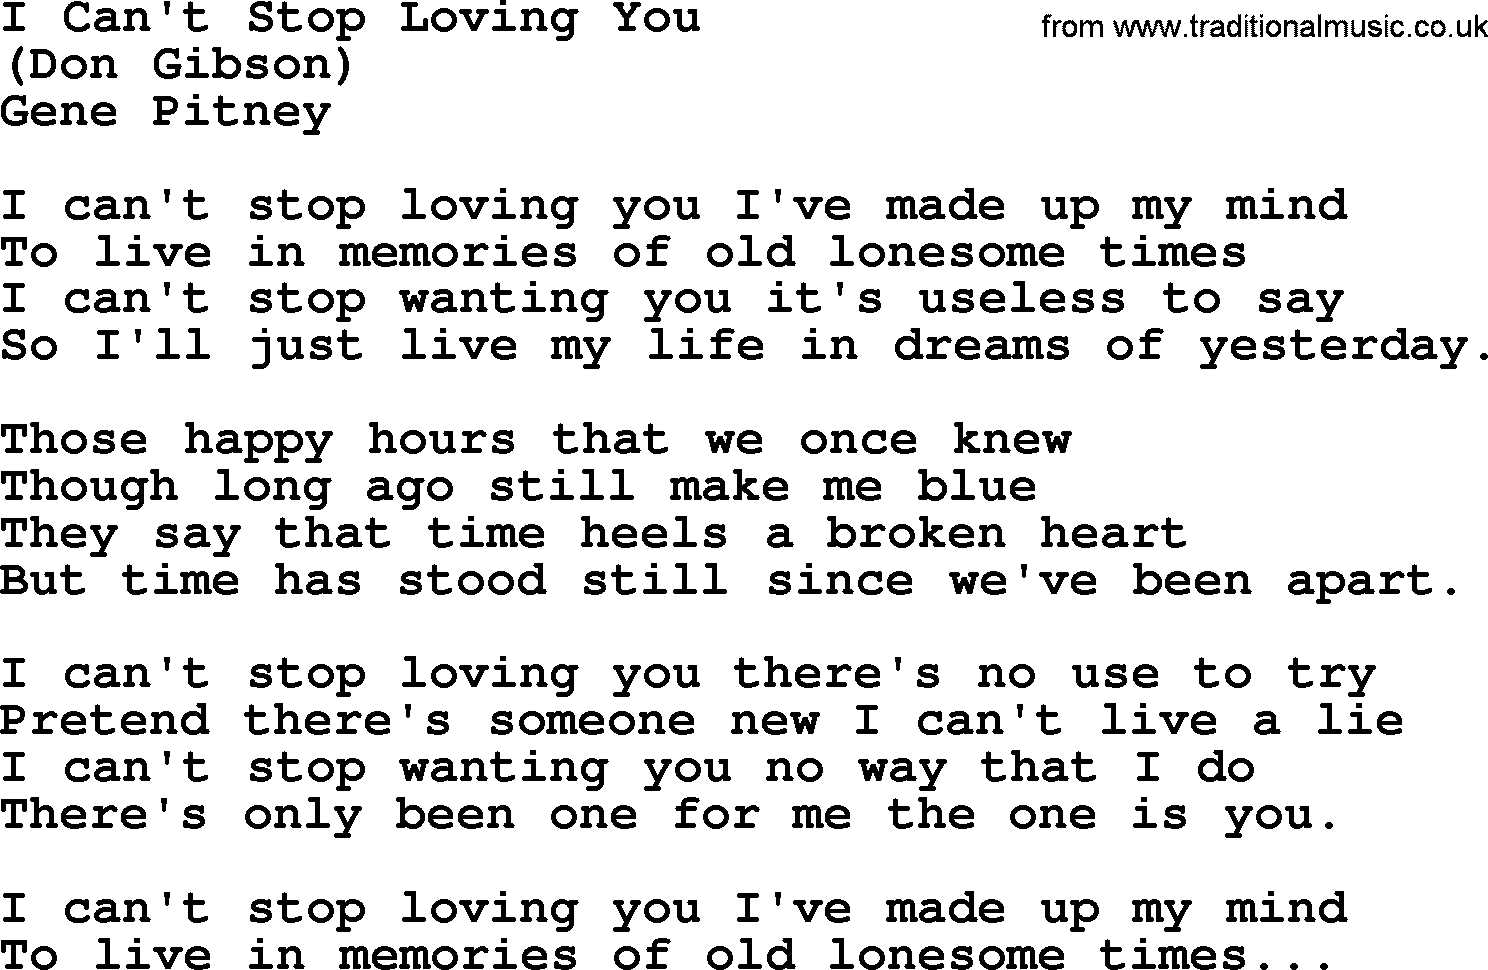 George Jones song: I Can't Stop Loving You, lyrics